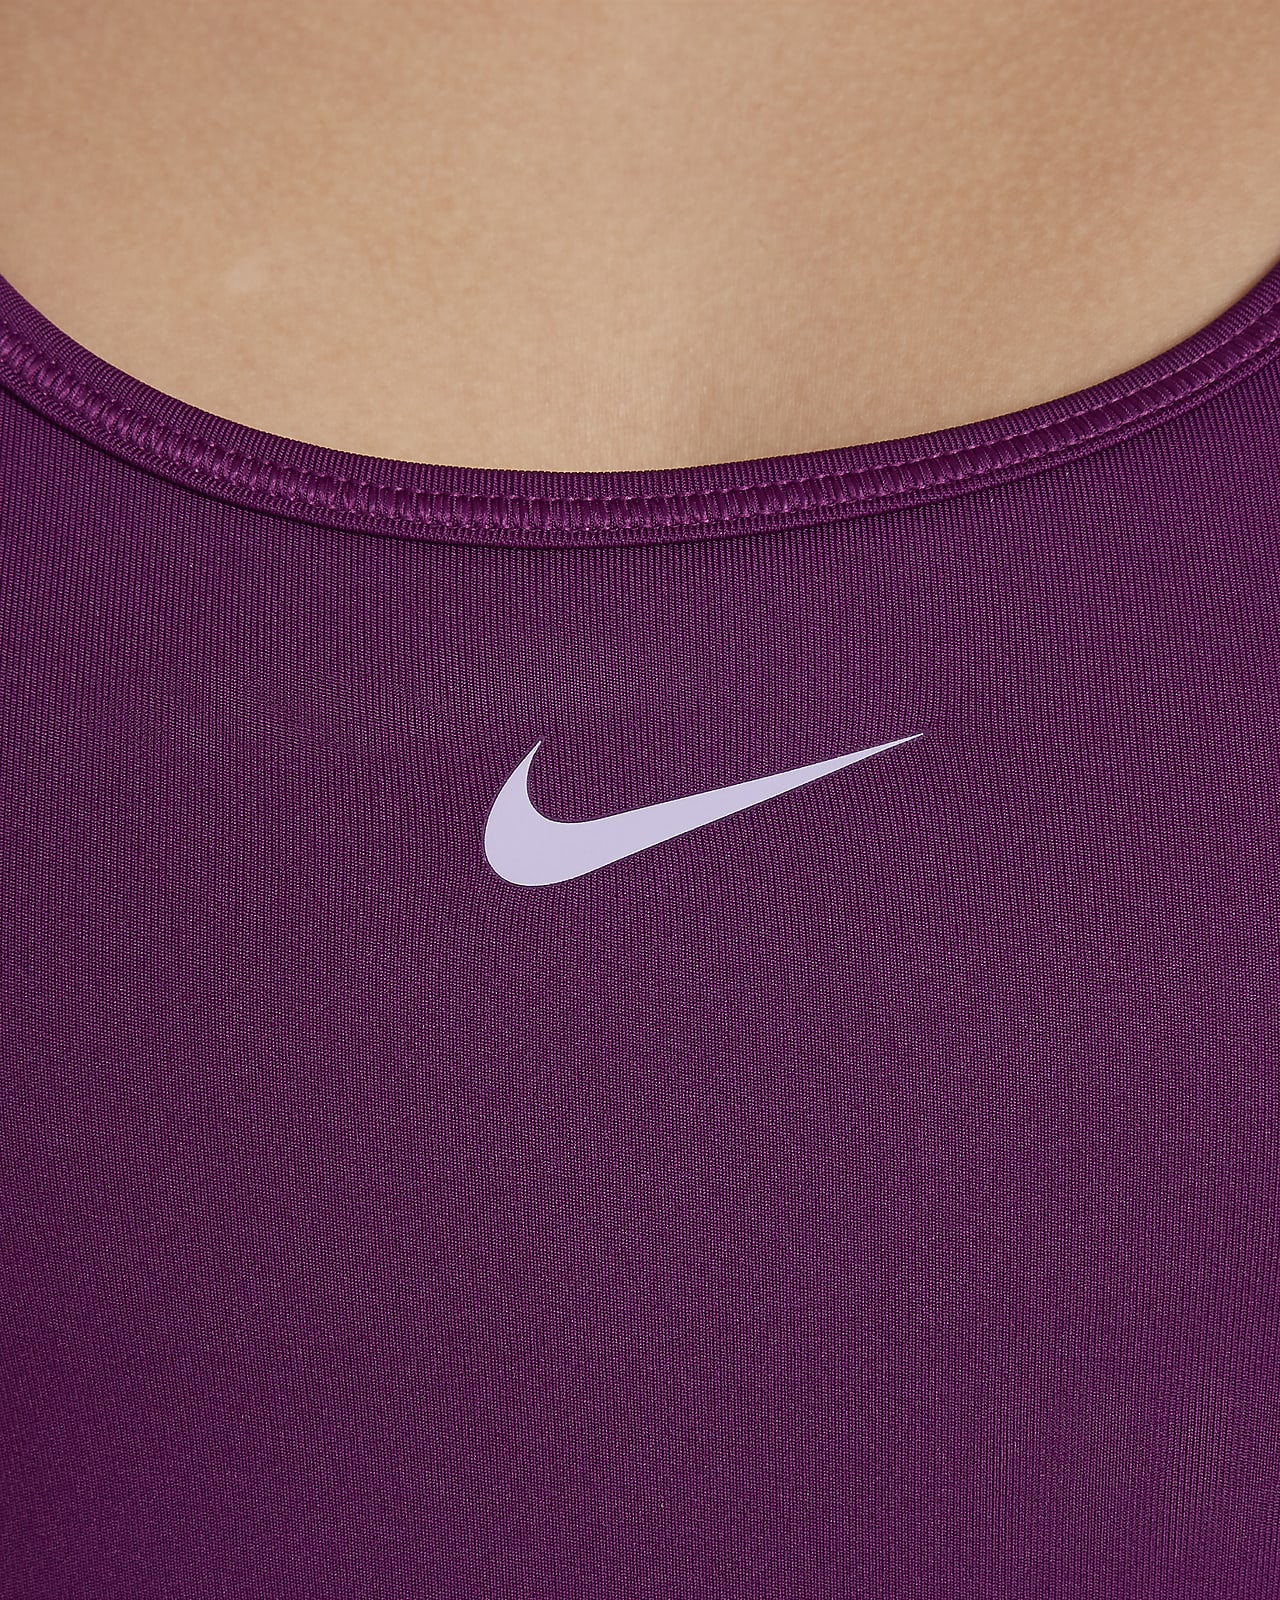 NIKE pro sport bra in deep purple/black straps/pink band women's size small